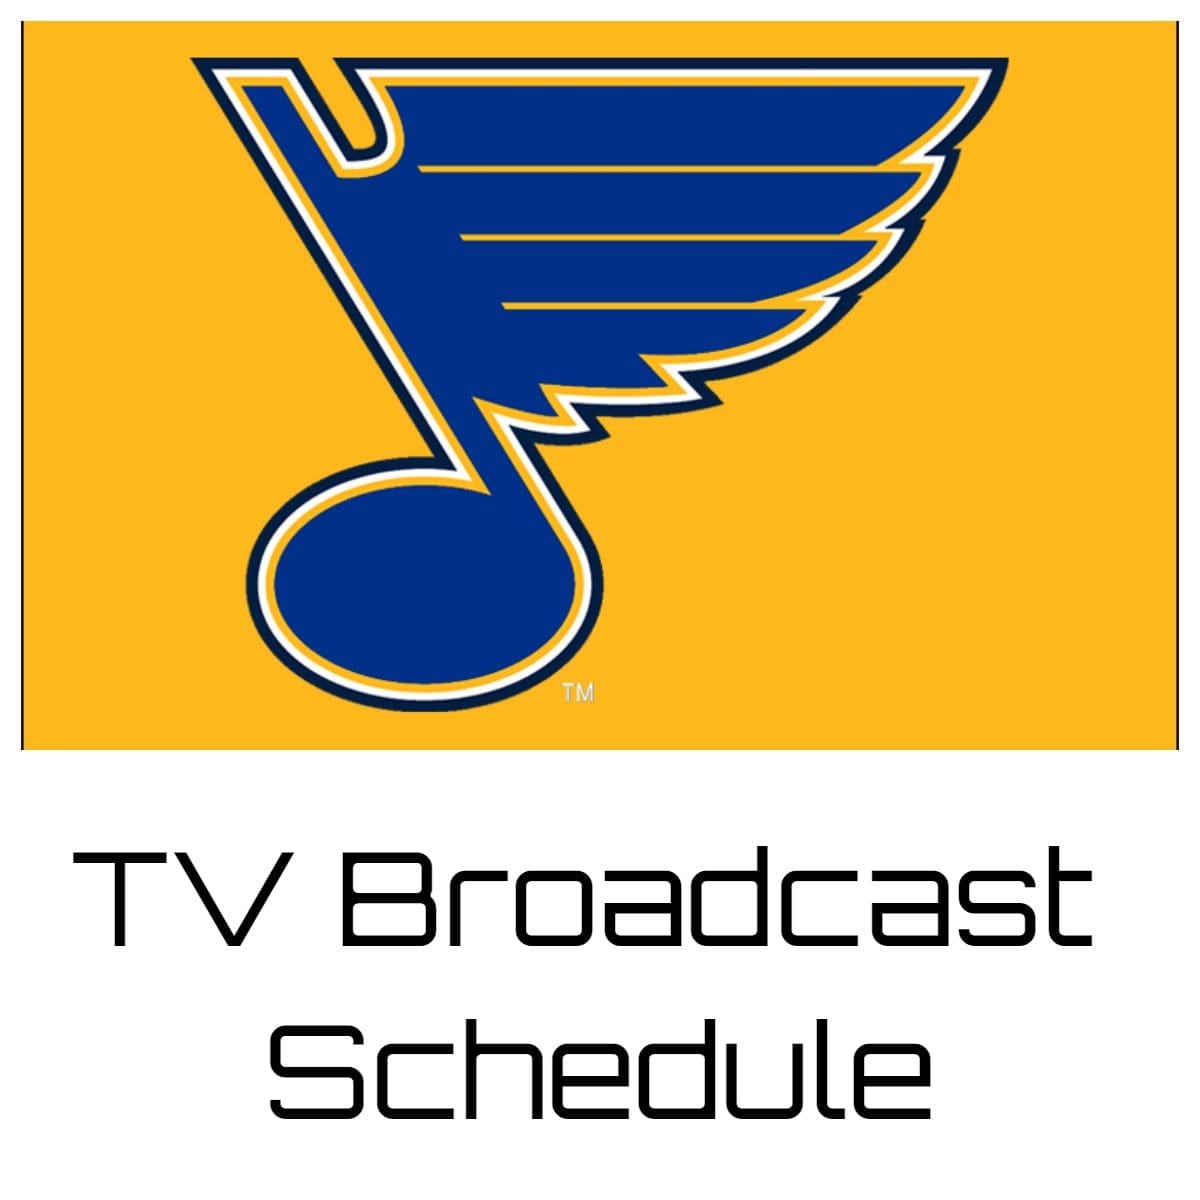 St. Louis Blues TV Broadcast Schedule